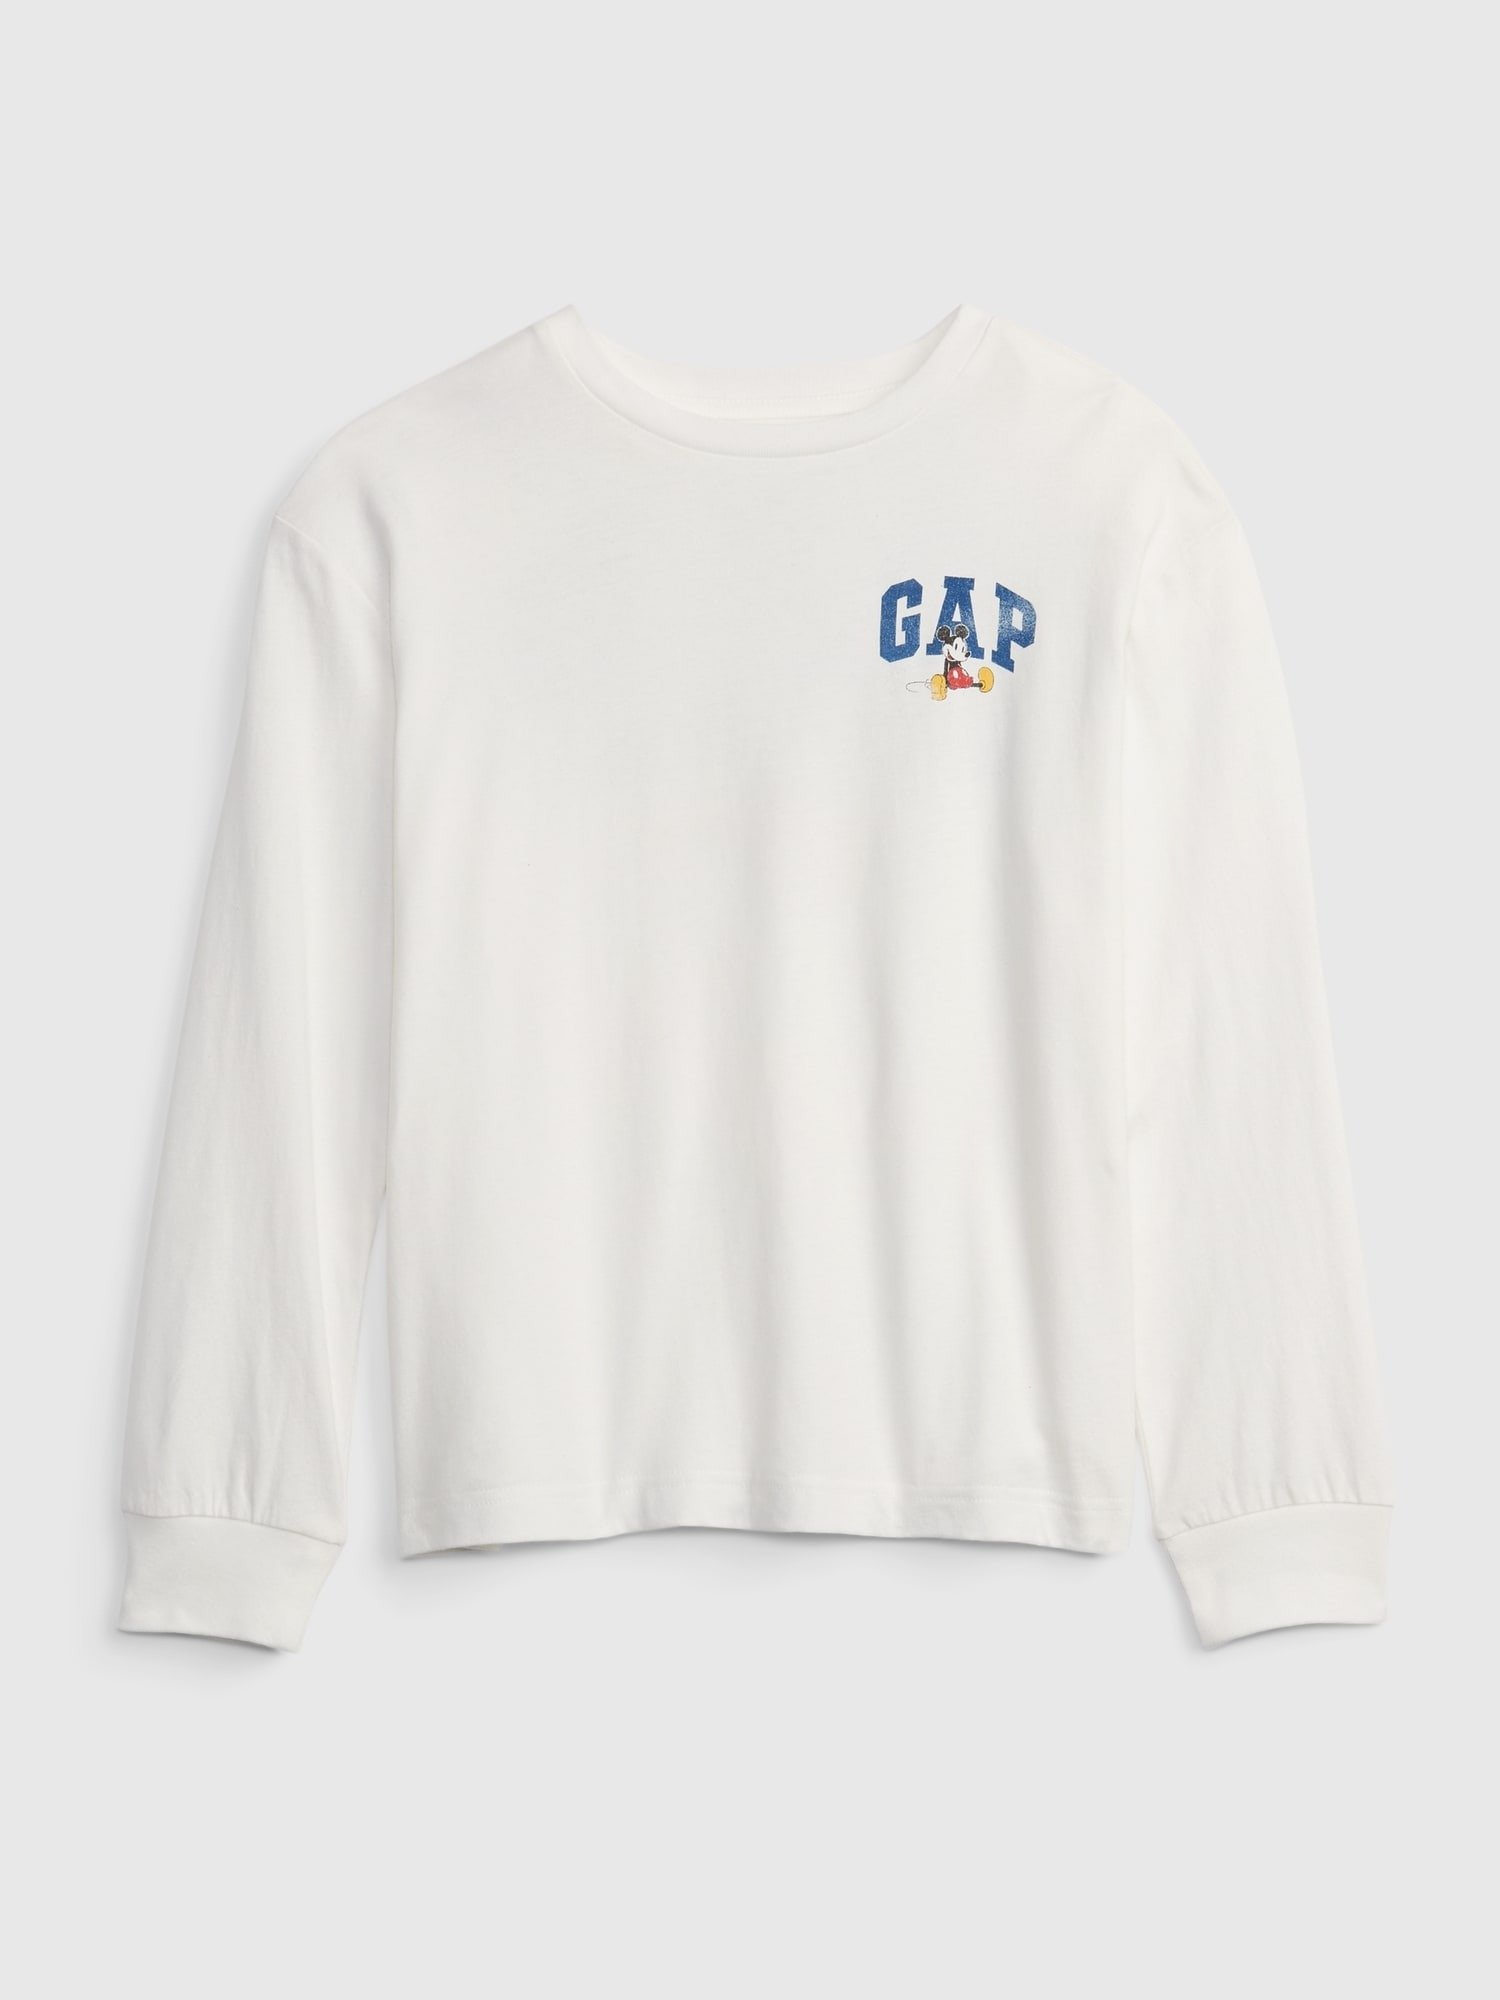 Gap x Disney Grafik Baskılı T-Shirt product image